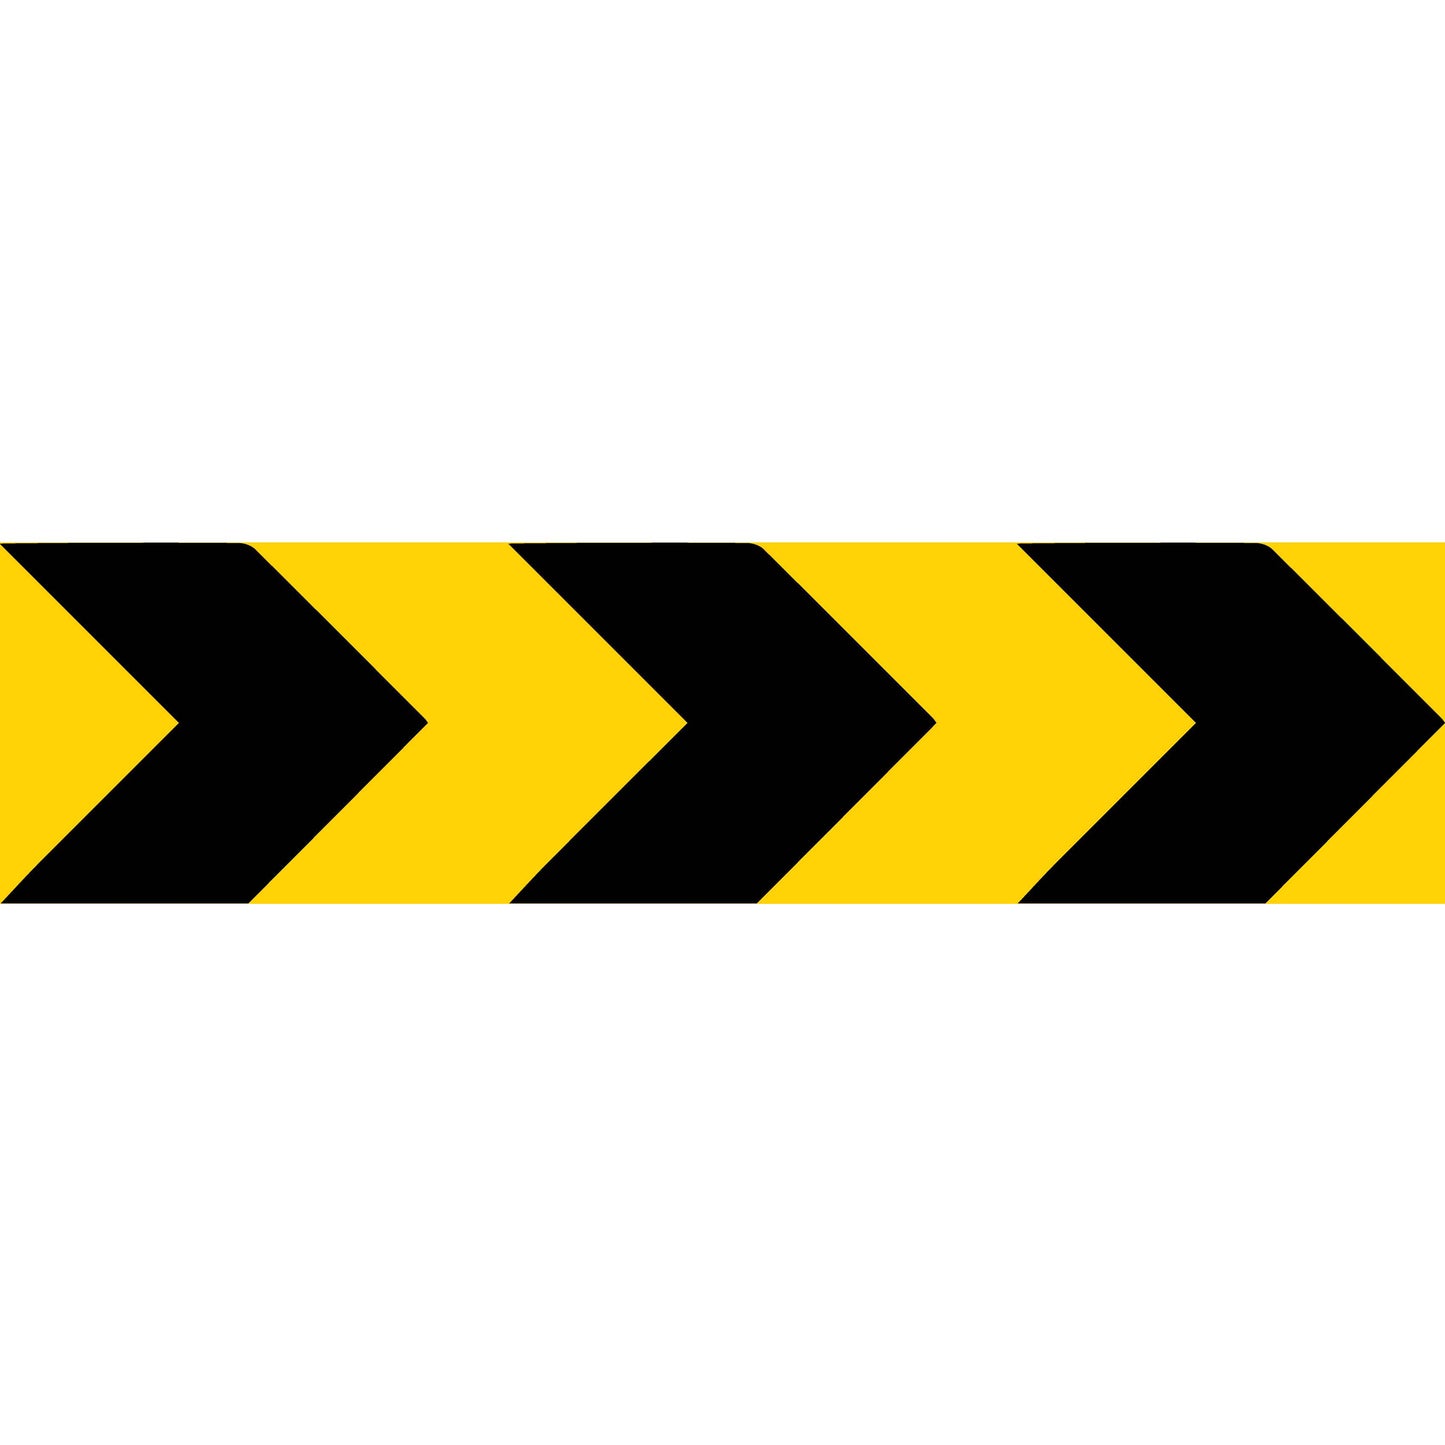 Yellow Black Bold Arrows Long Skinny Multi Message Traffic Sign